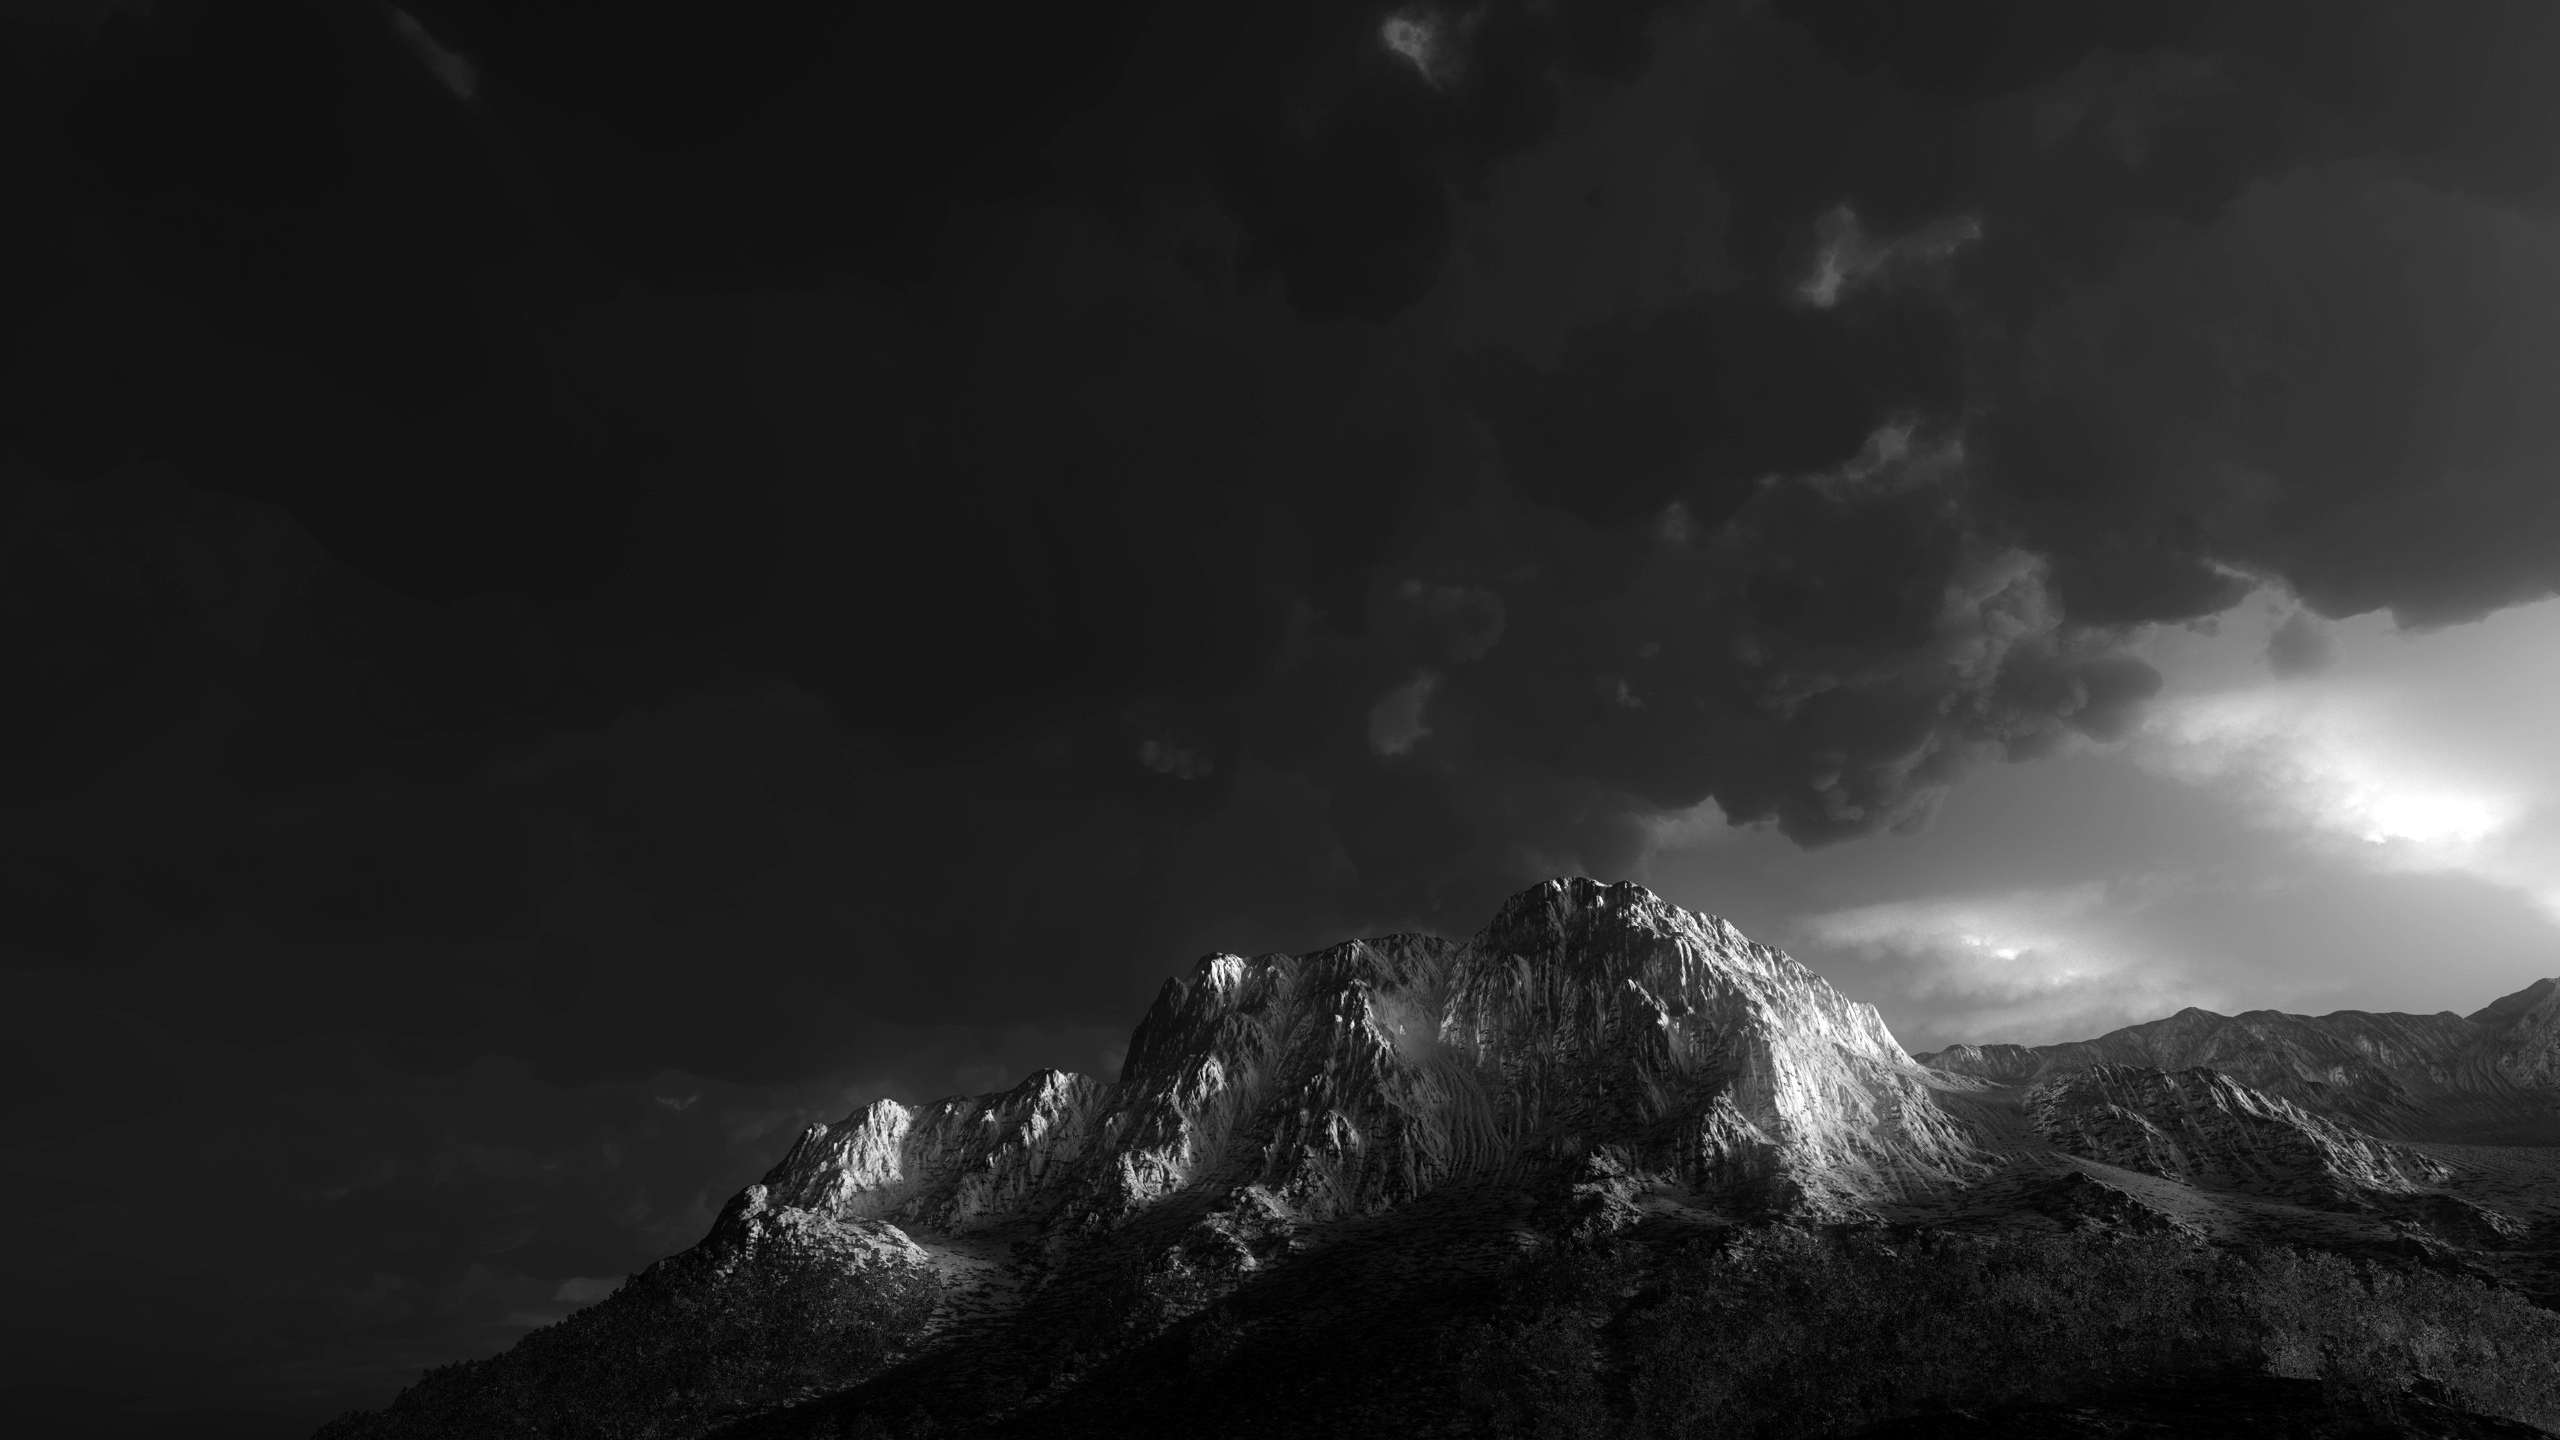 General 2560x1440 snowy peak mountains dark landscape nature photography monochrome